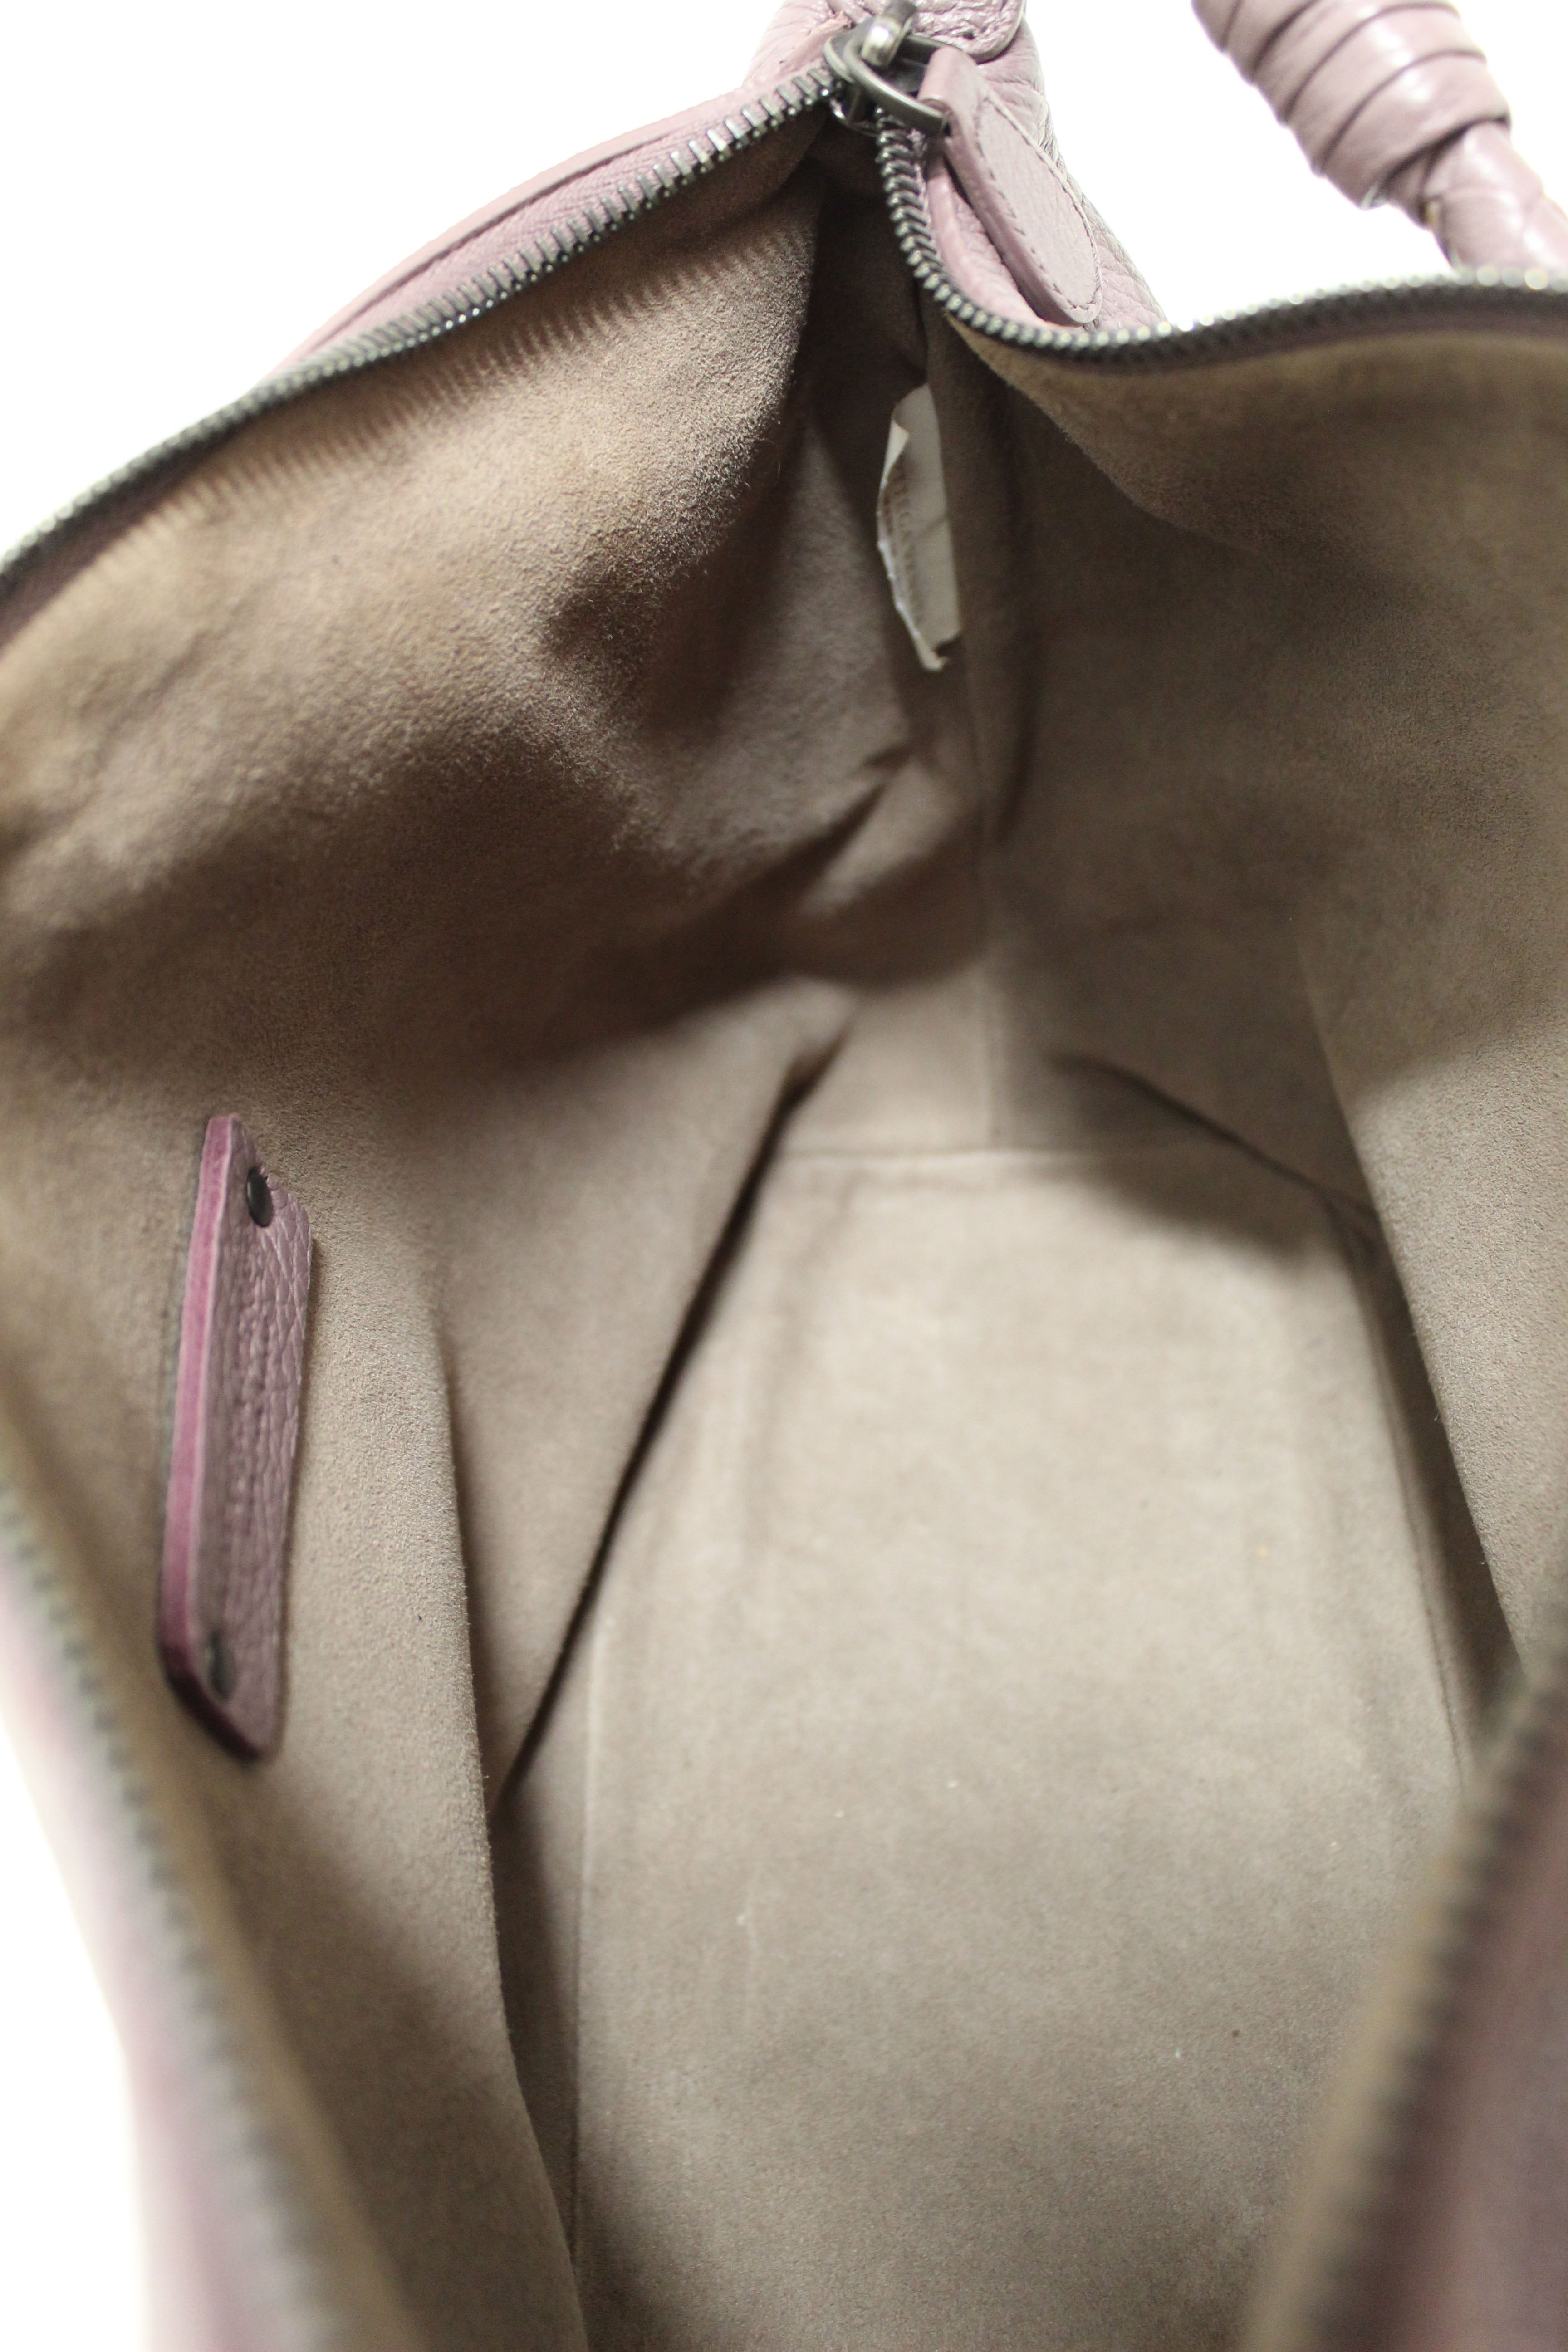 Authentic Bottega Veneta Purple Leather Small Hobo Shoulder Bag